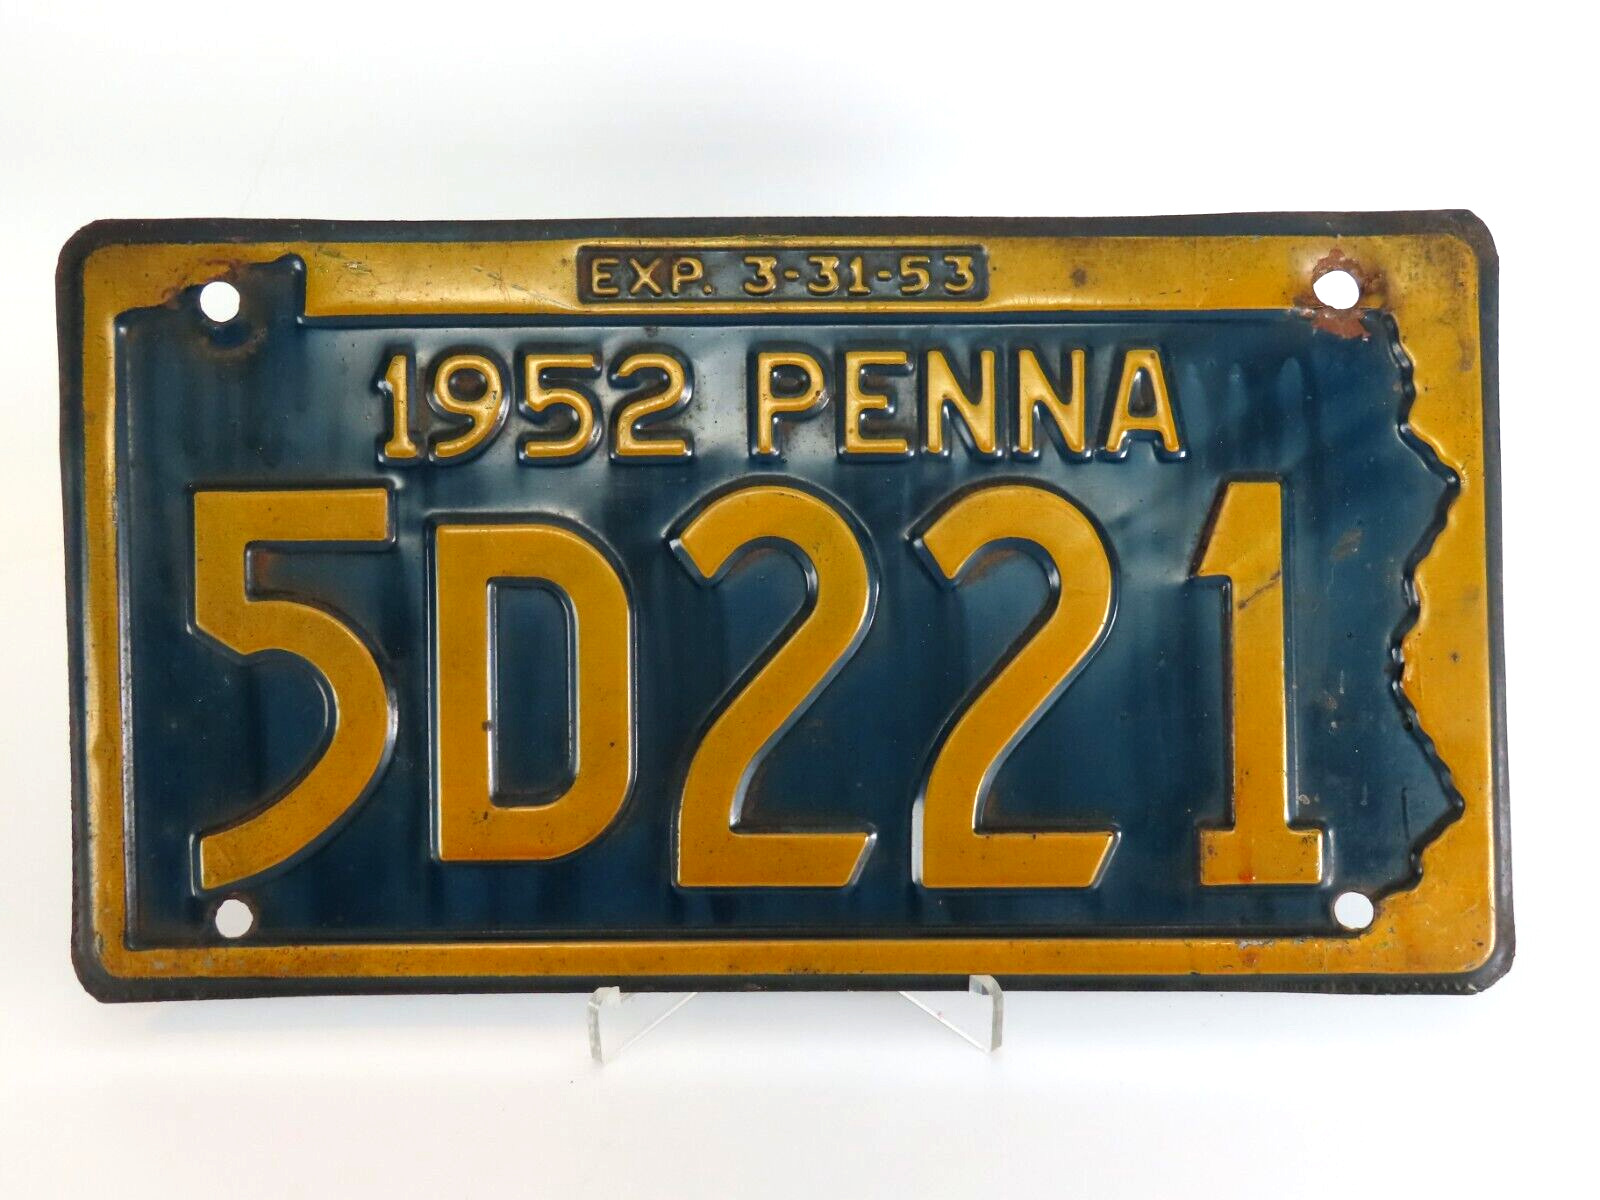 1952 Pennsylvania PA Car License Plate #5D221